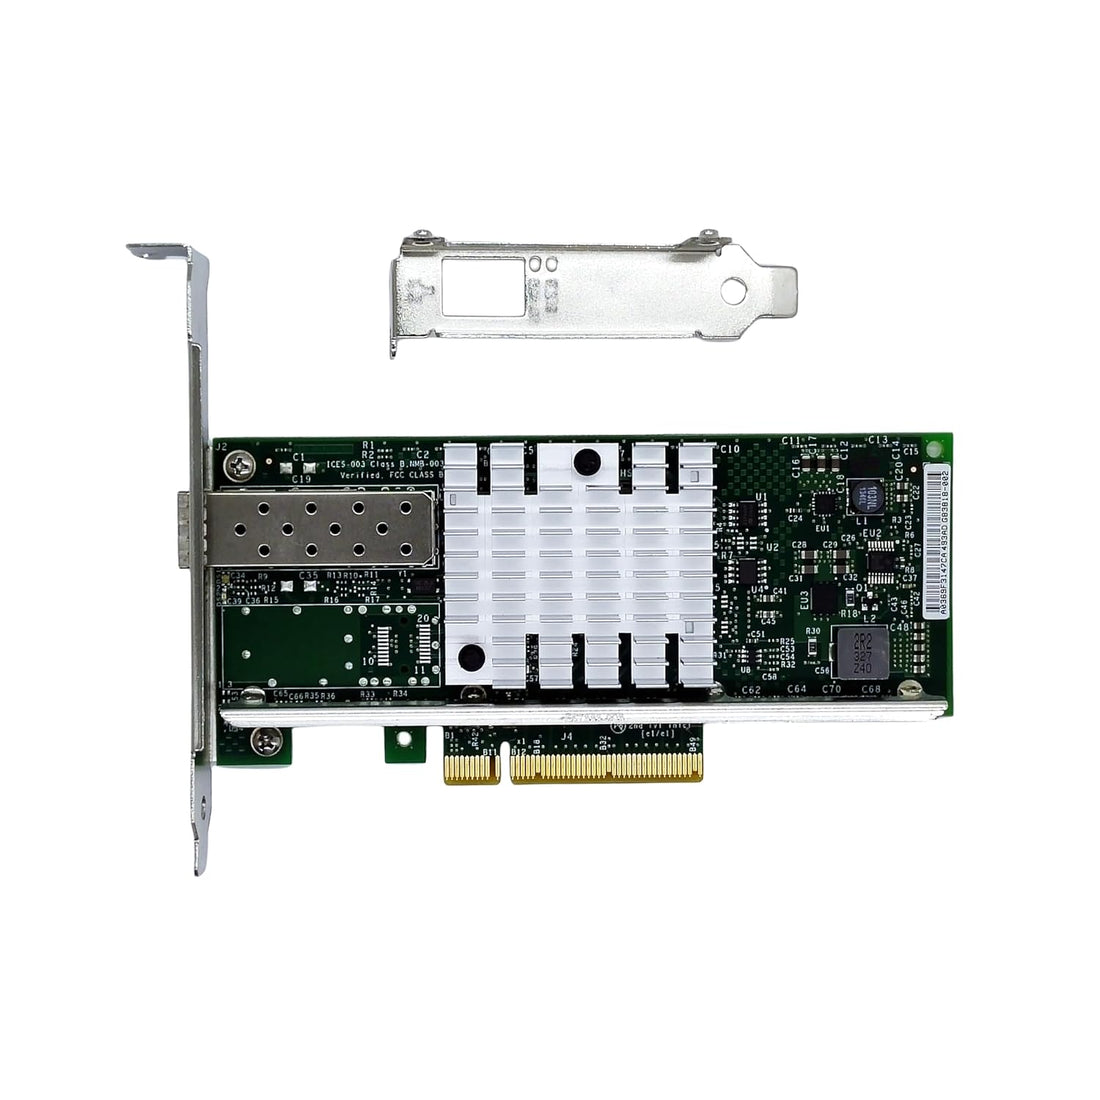 SVNXINGTII 10GB Dual SFP PCI-e NIC Network Card，X520-DA1 with Intel 82599EN Controller，E10G41BTDA，Ethernet LAN Adapter 10Gbps，Support Windows Server/Windows/Linux/Vmware (X520-DA1)